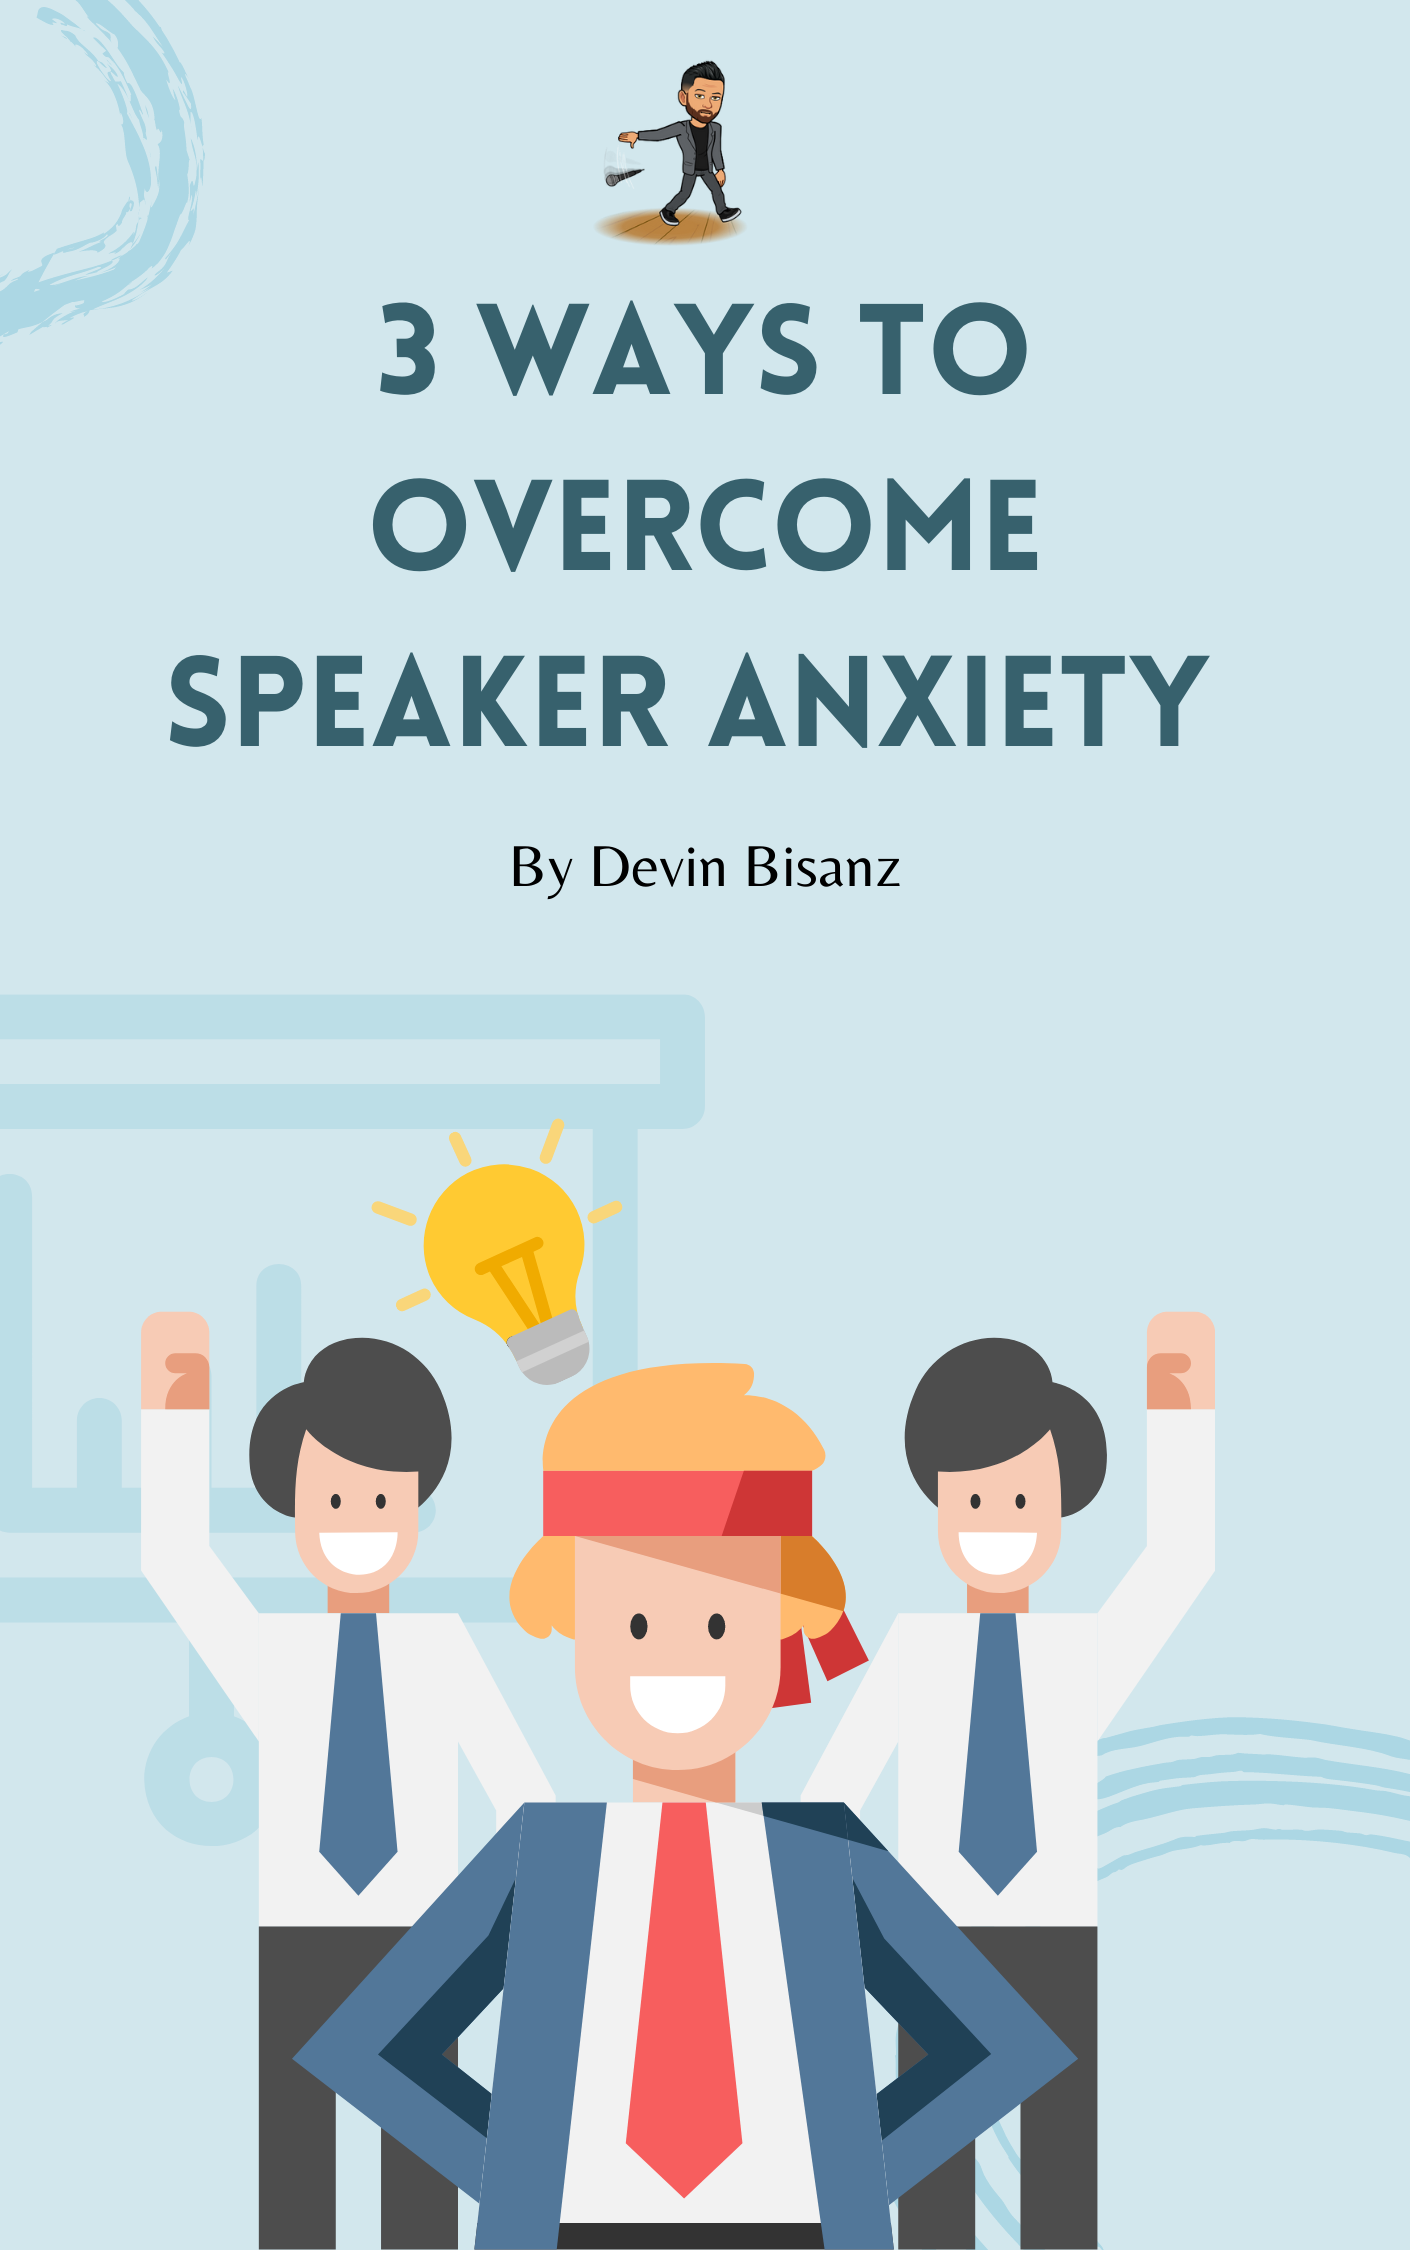 3 ways to overcome speaker anxiety